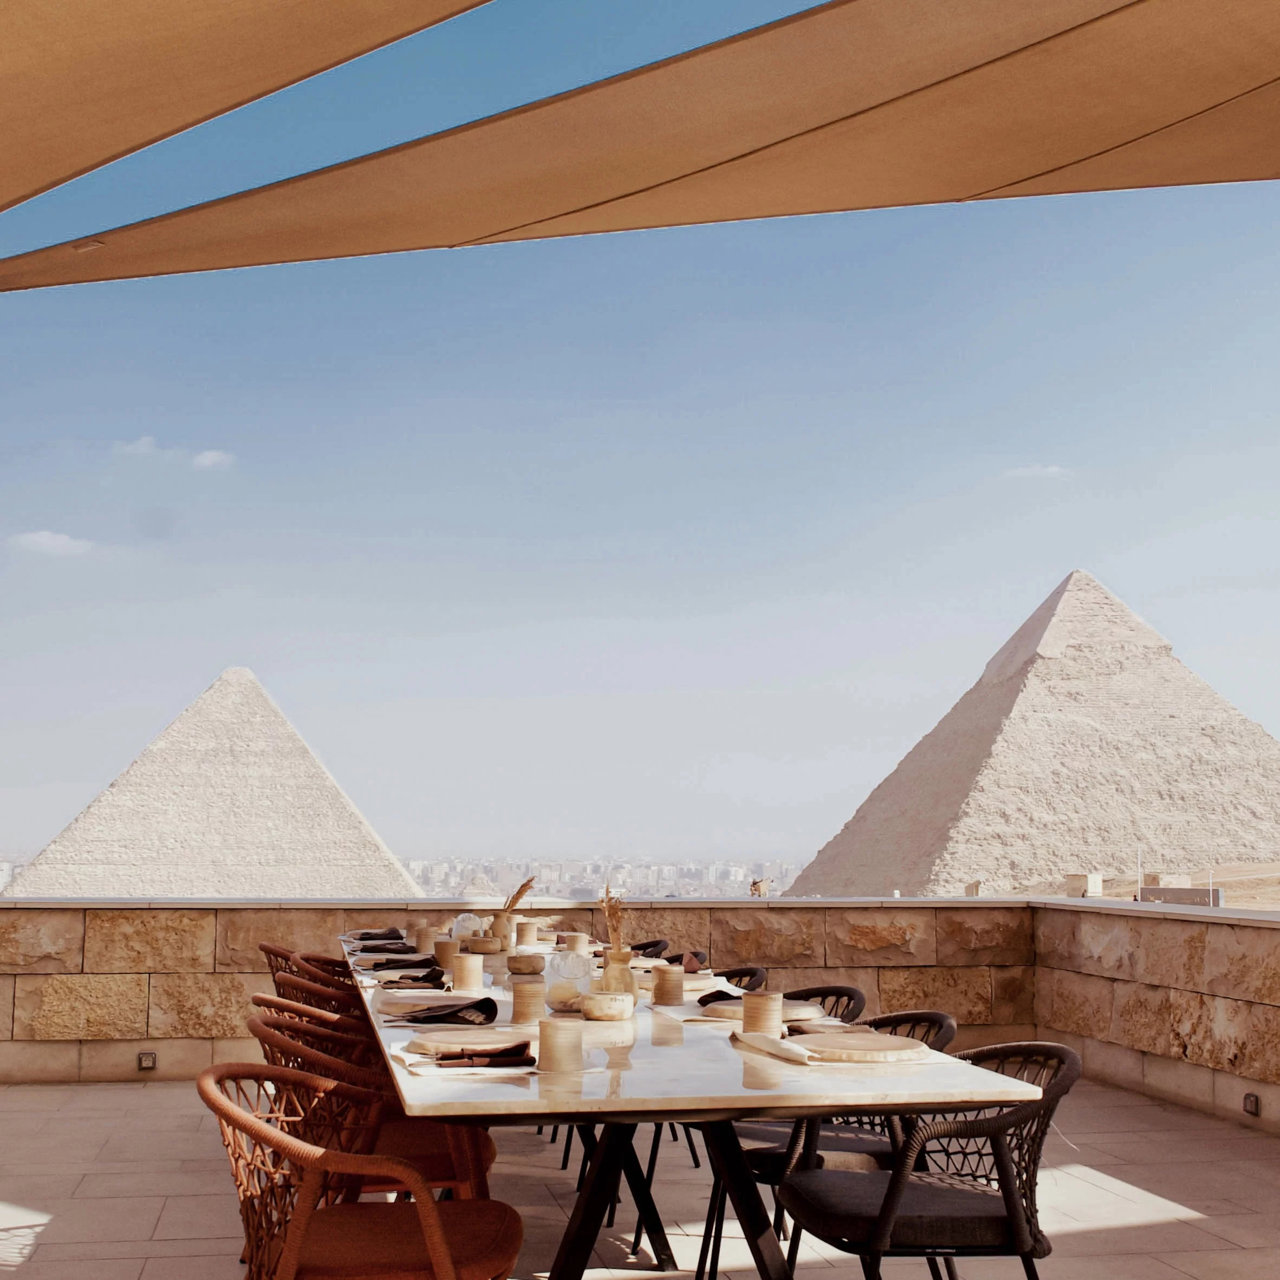 Khufu's restaurant